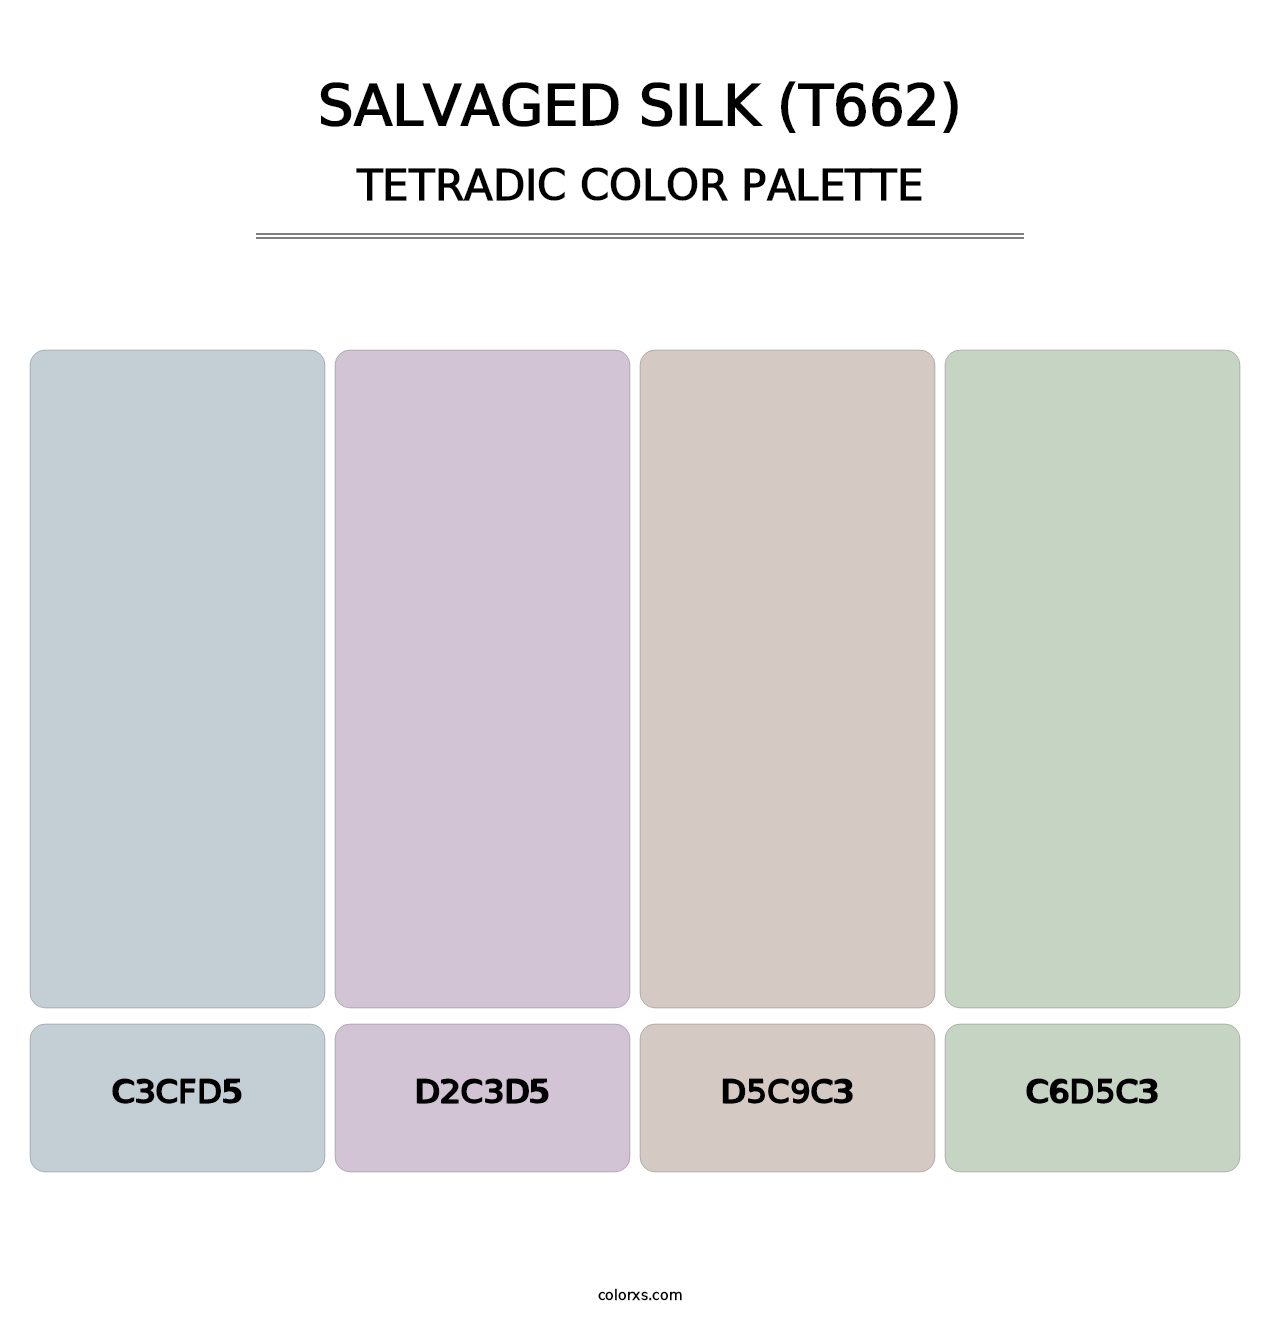 Salvaged Silk (T662) - Tetradic Color Palette